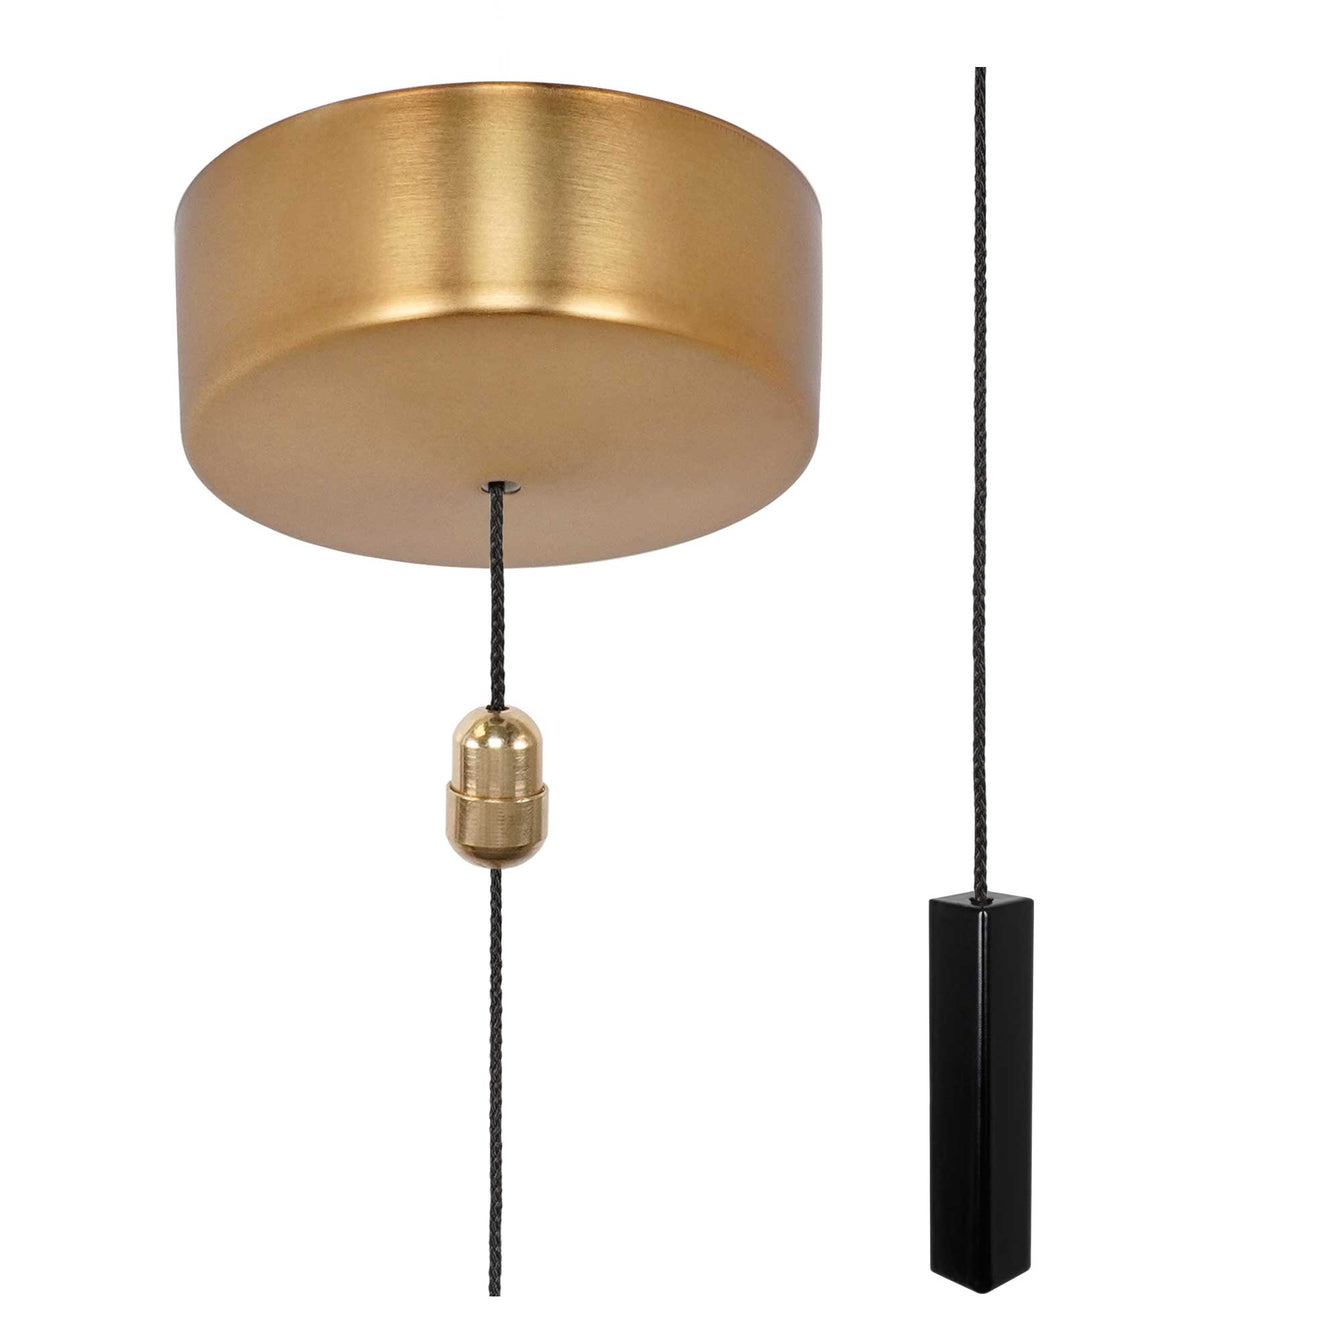 ElekTek Premium Brushed Brass Bathroom Light Pull Cord Switch Kit with Pull Chain Handle Black Cylinder / Black Cord